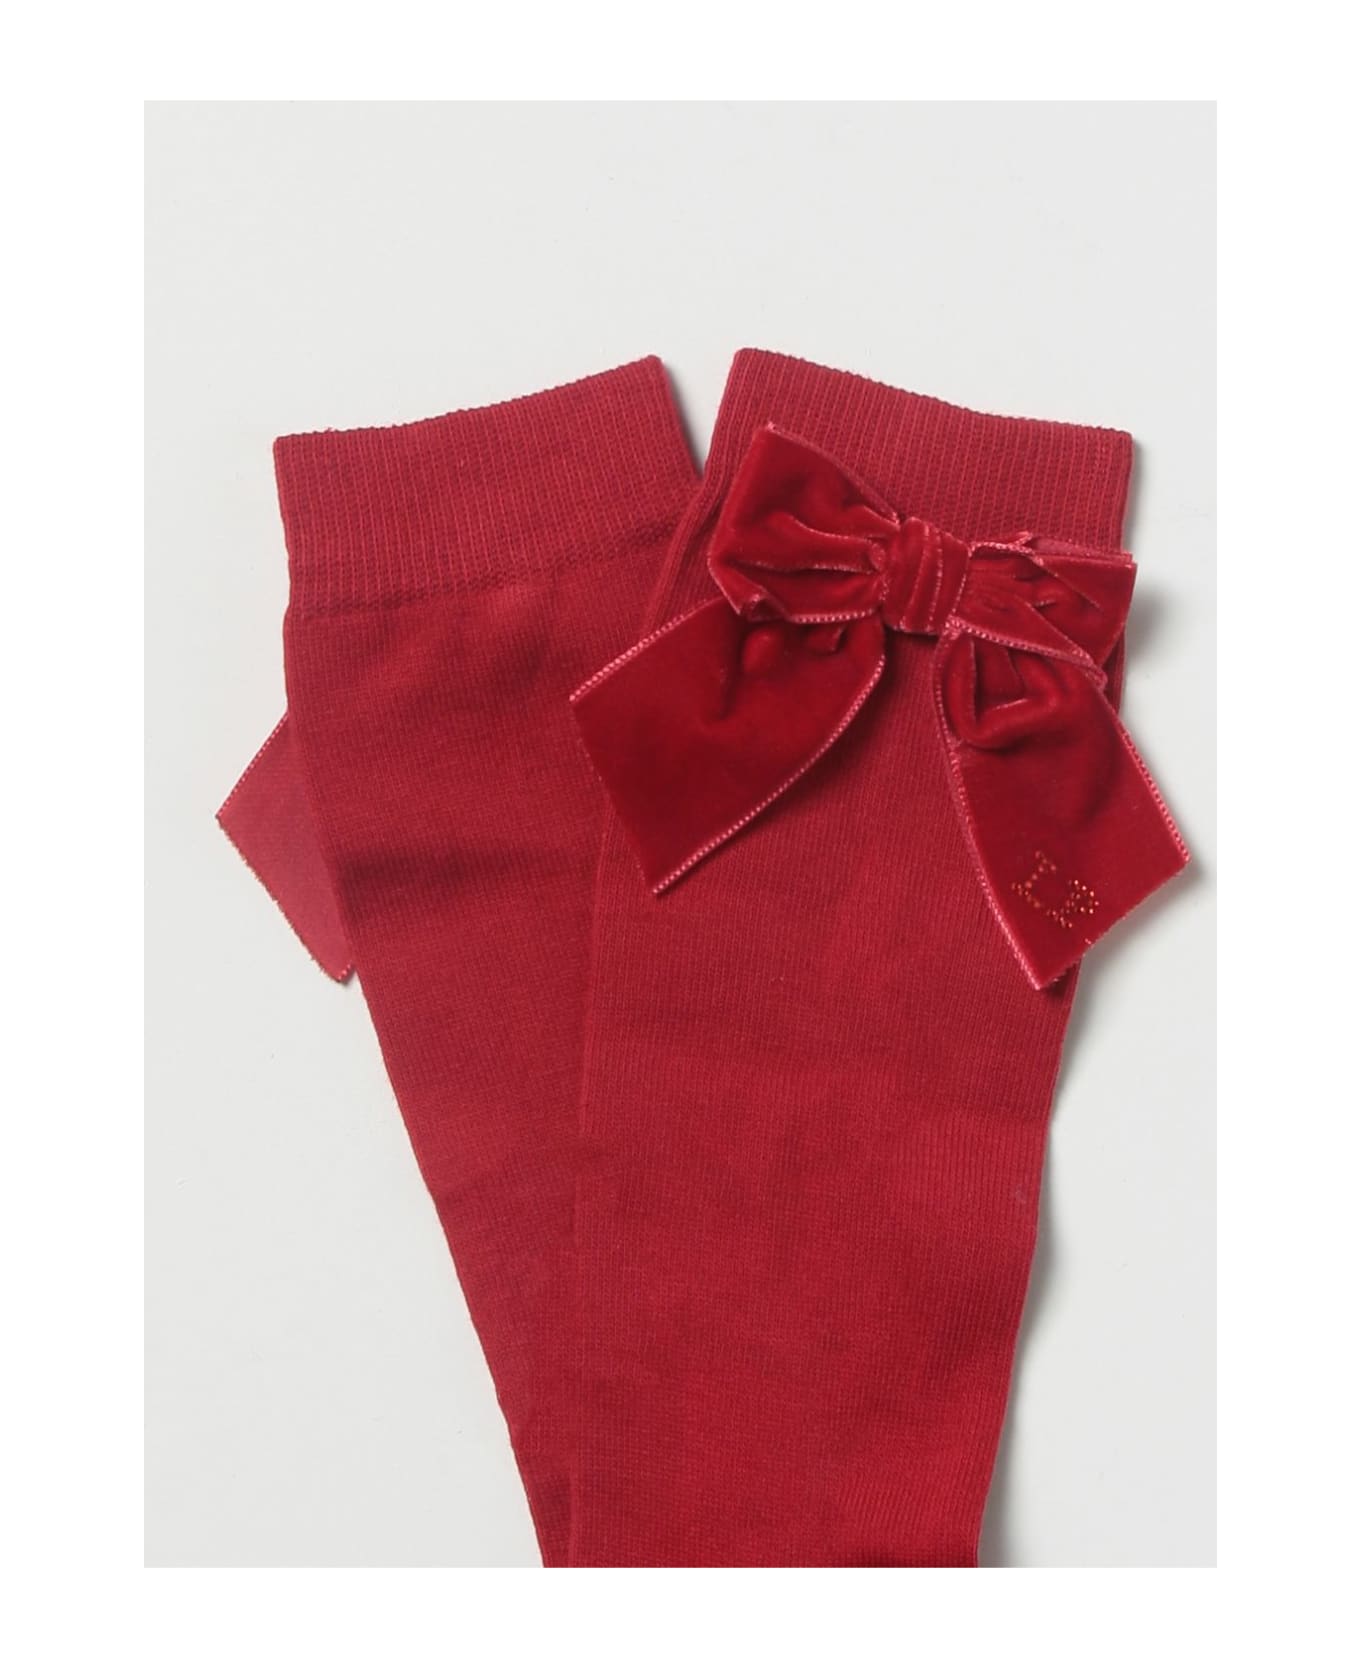 La Perla Socks With Bow - Red